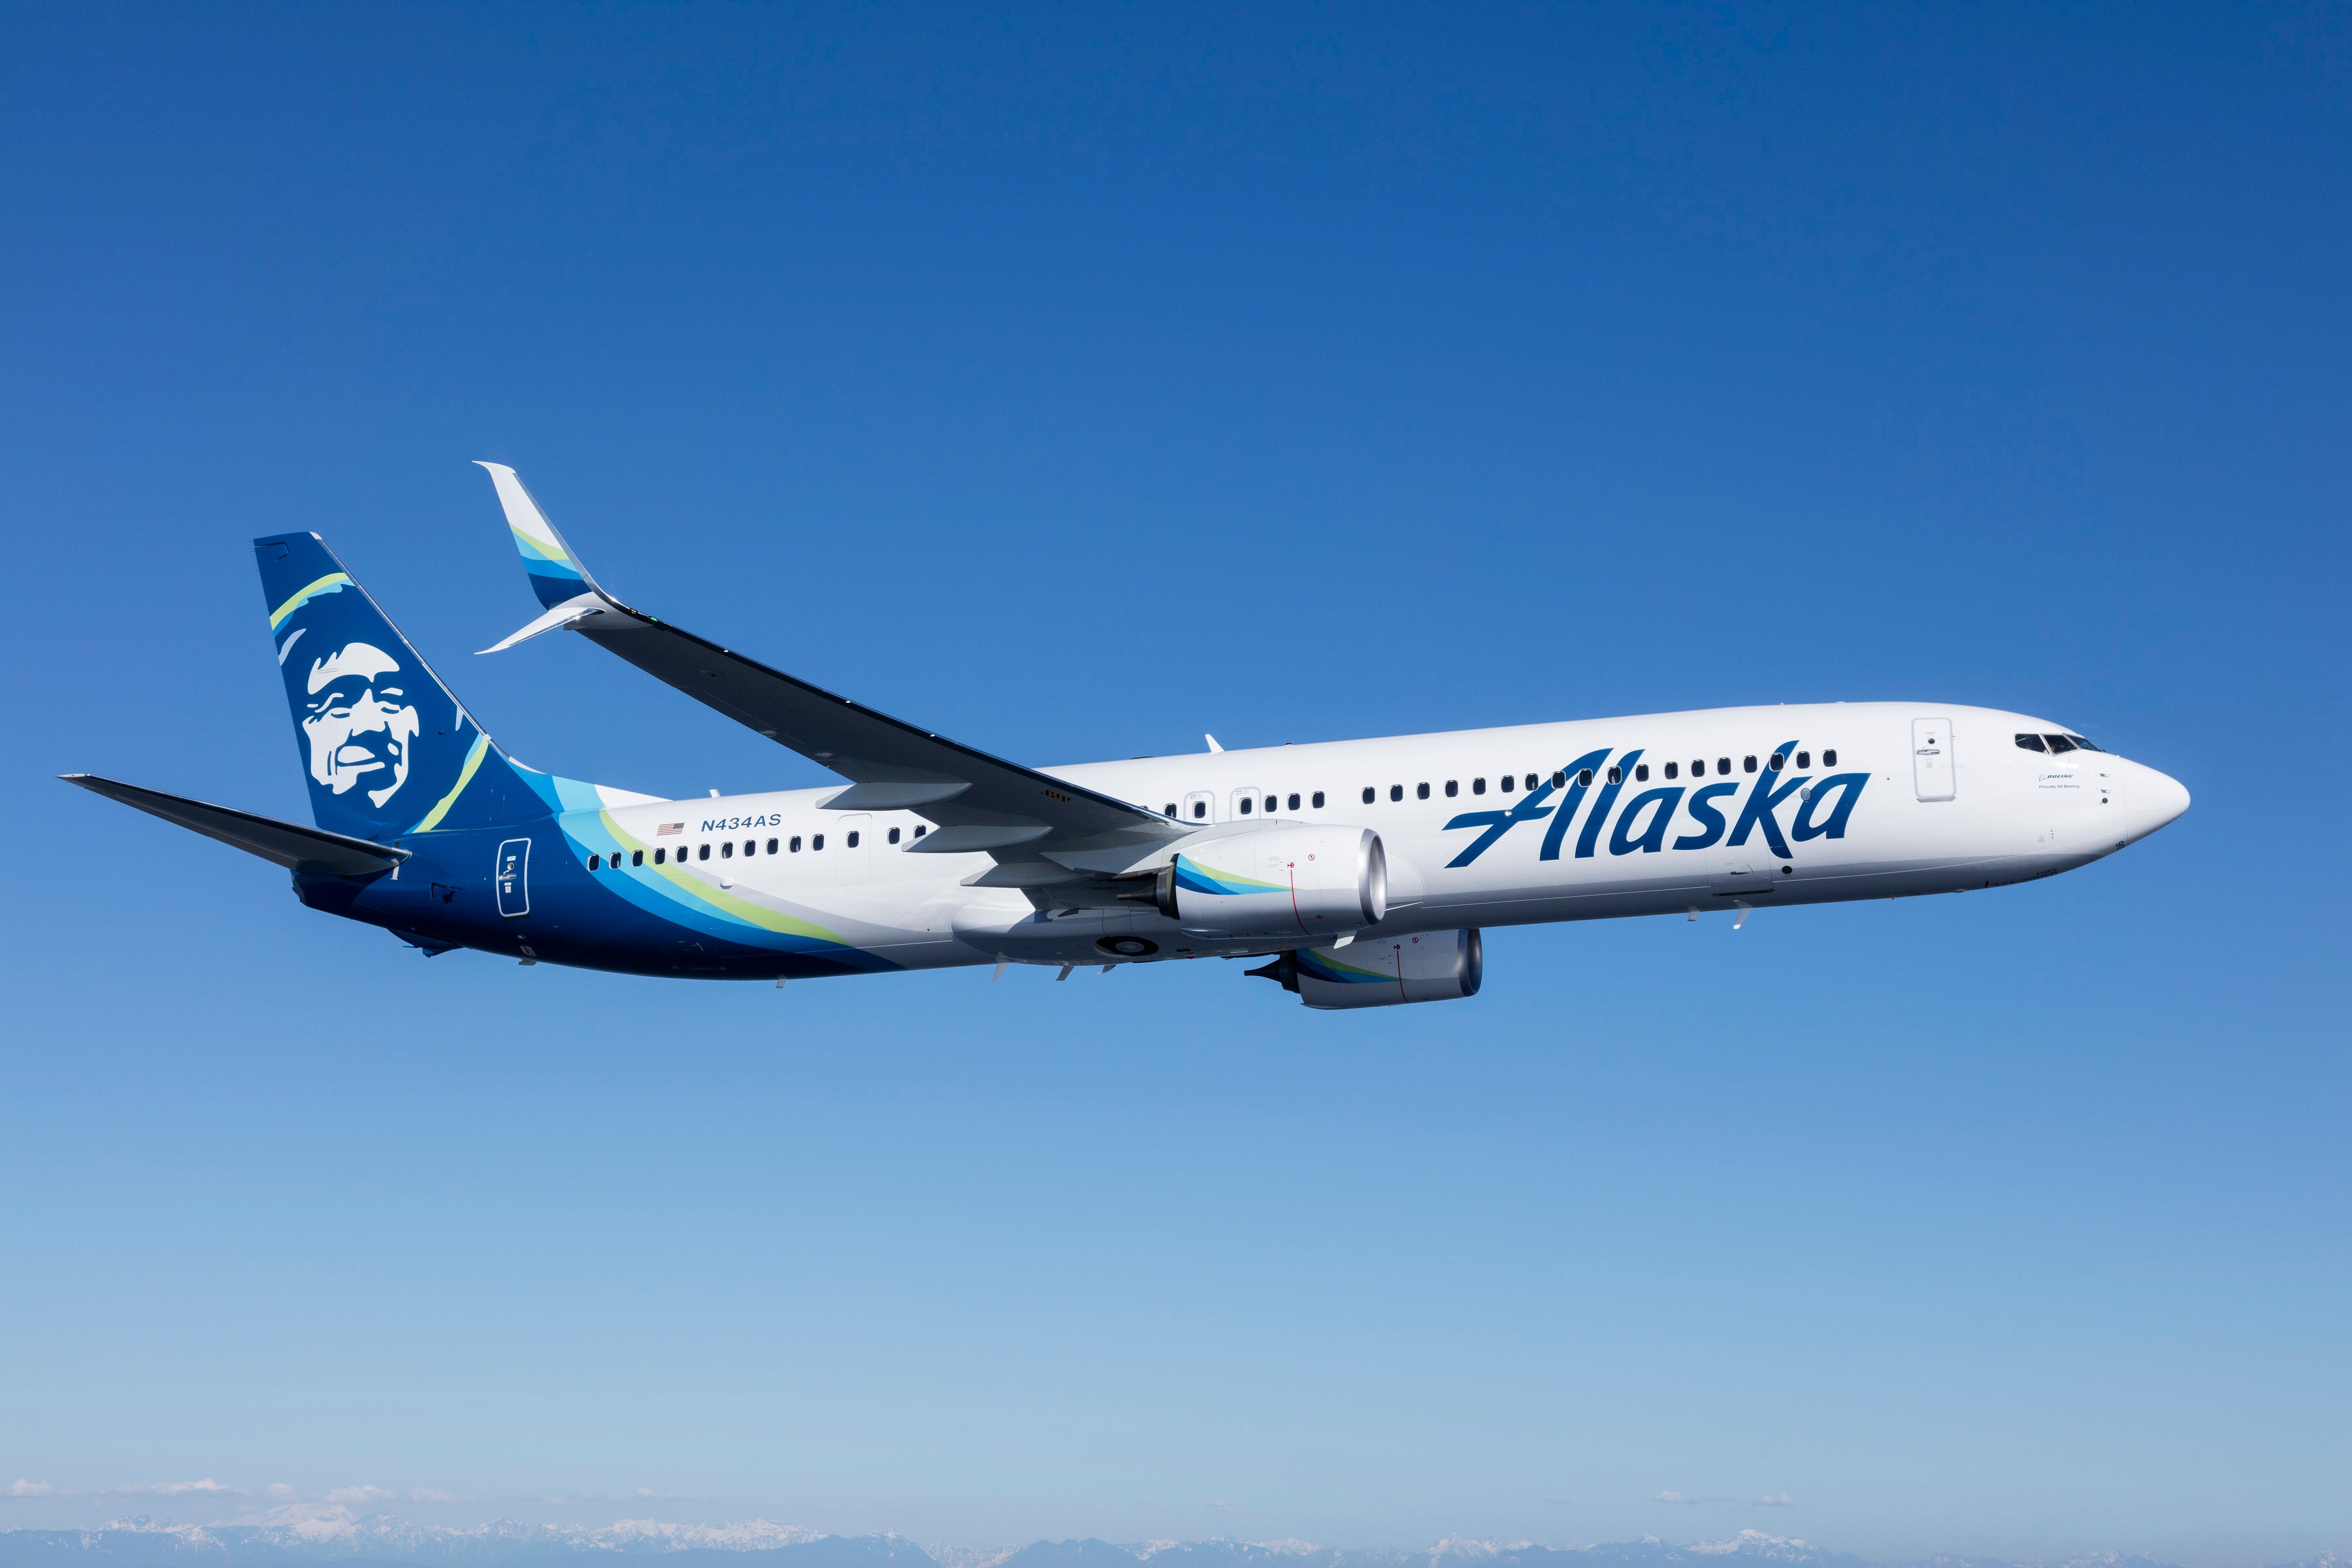 alaska air travel insurance covered reasons